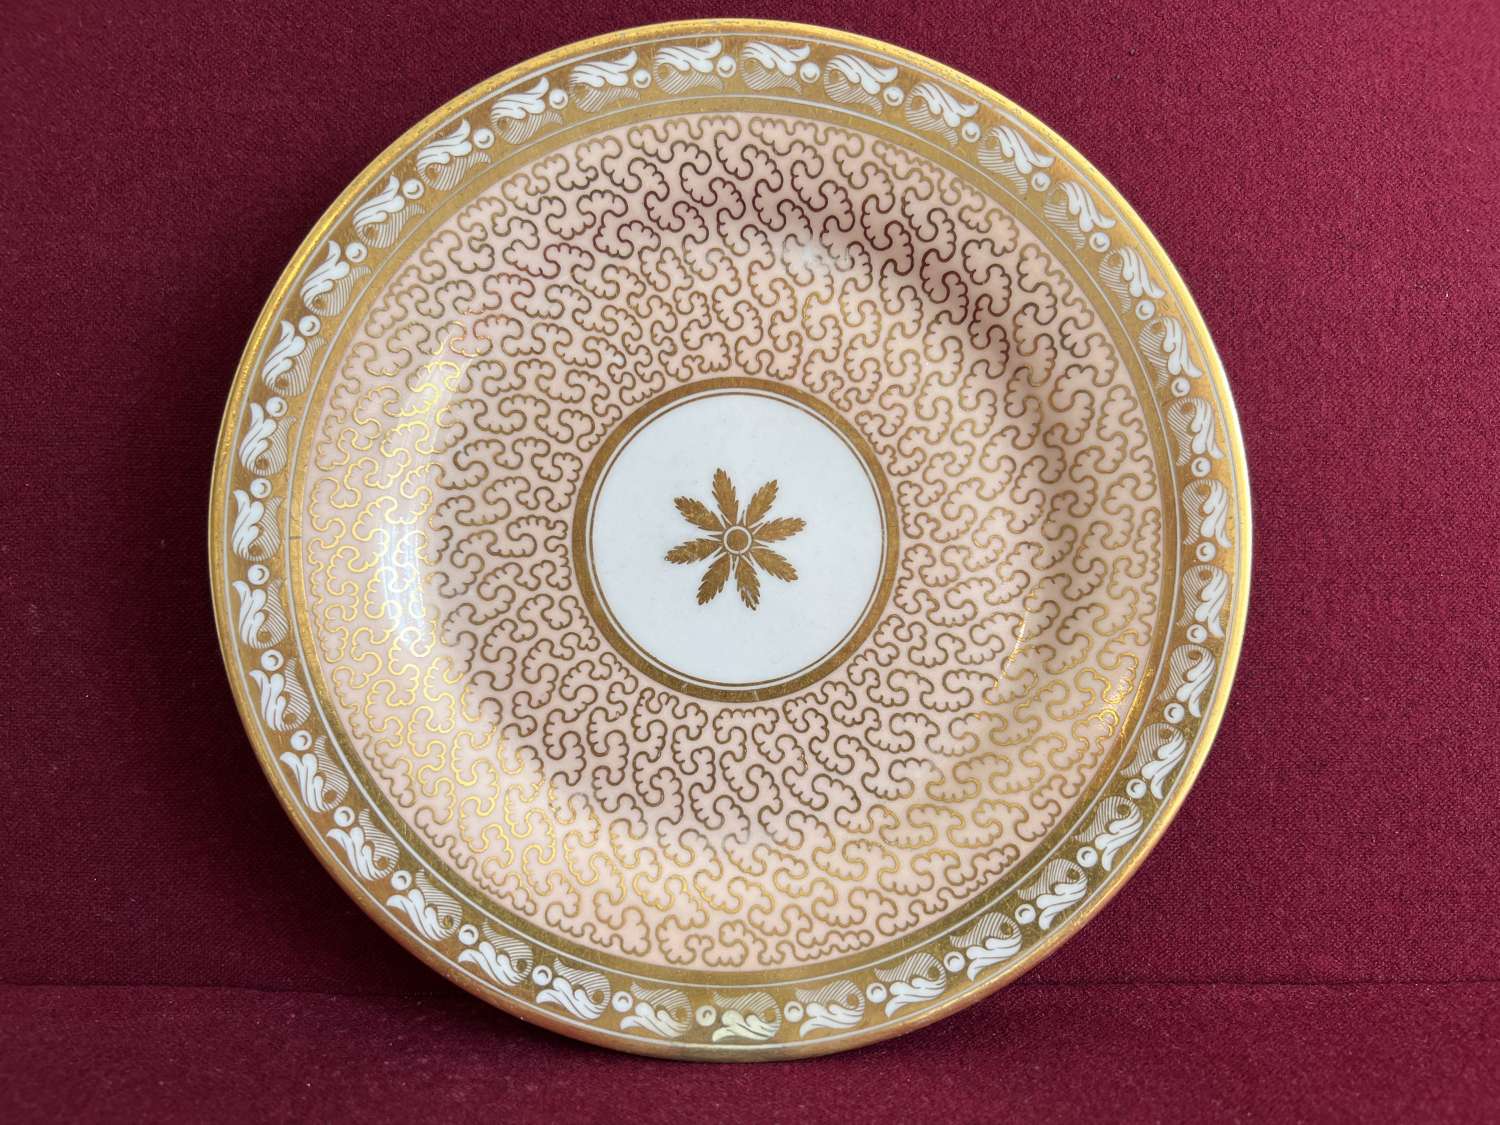 A Barr Flight Barr Worcester Porcelain Plate c.1804-1813